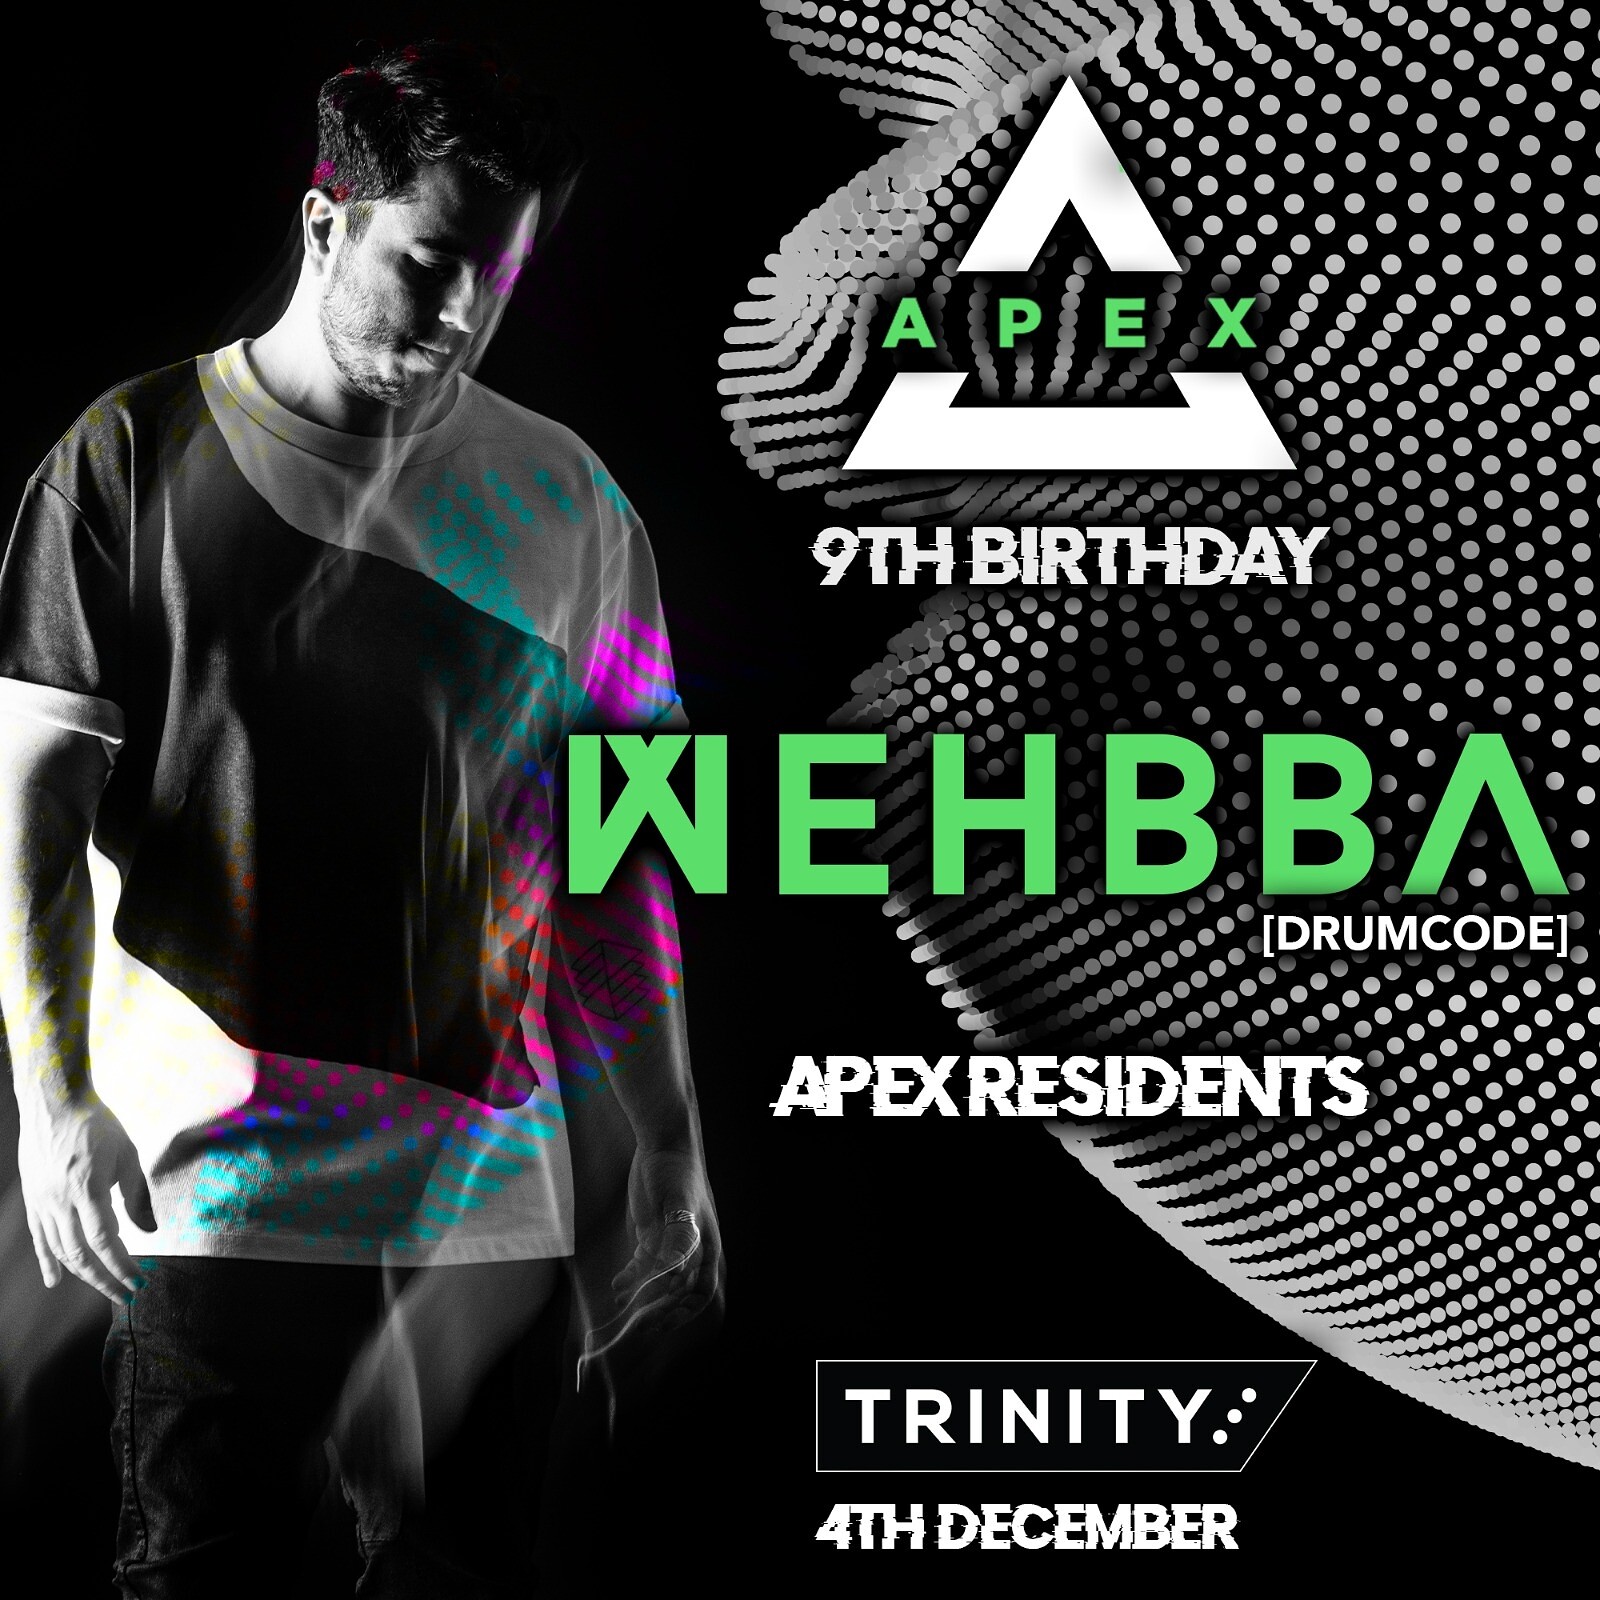 Apex 9th Birthday: Wehbba at The Trinity Centre